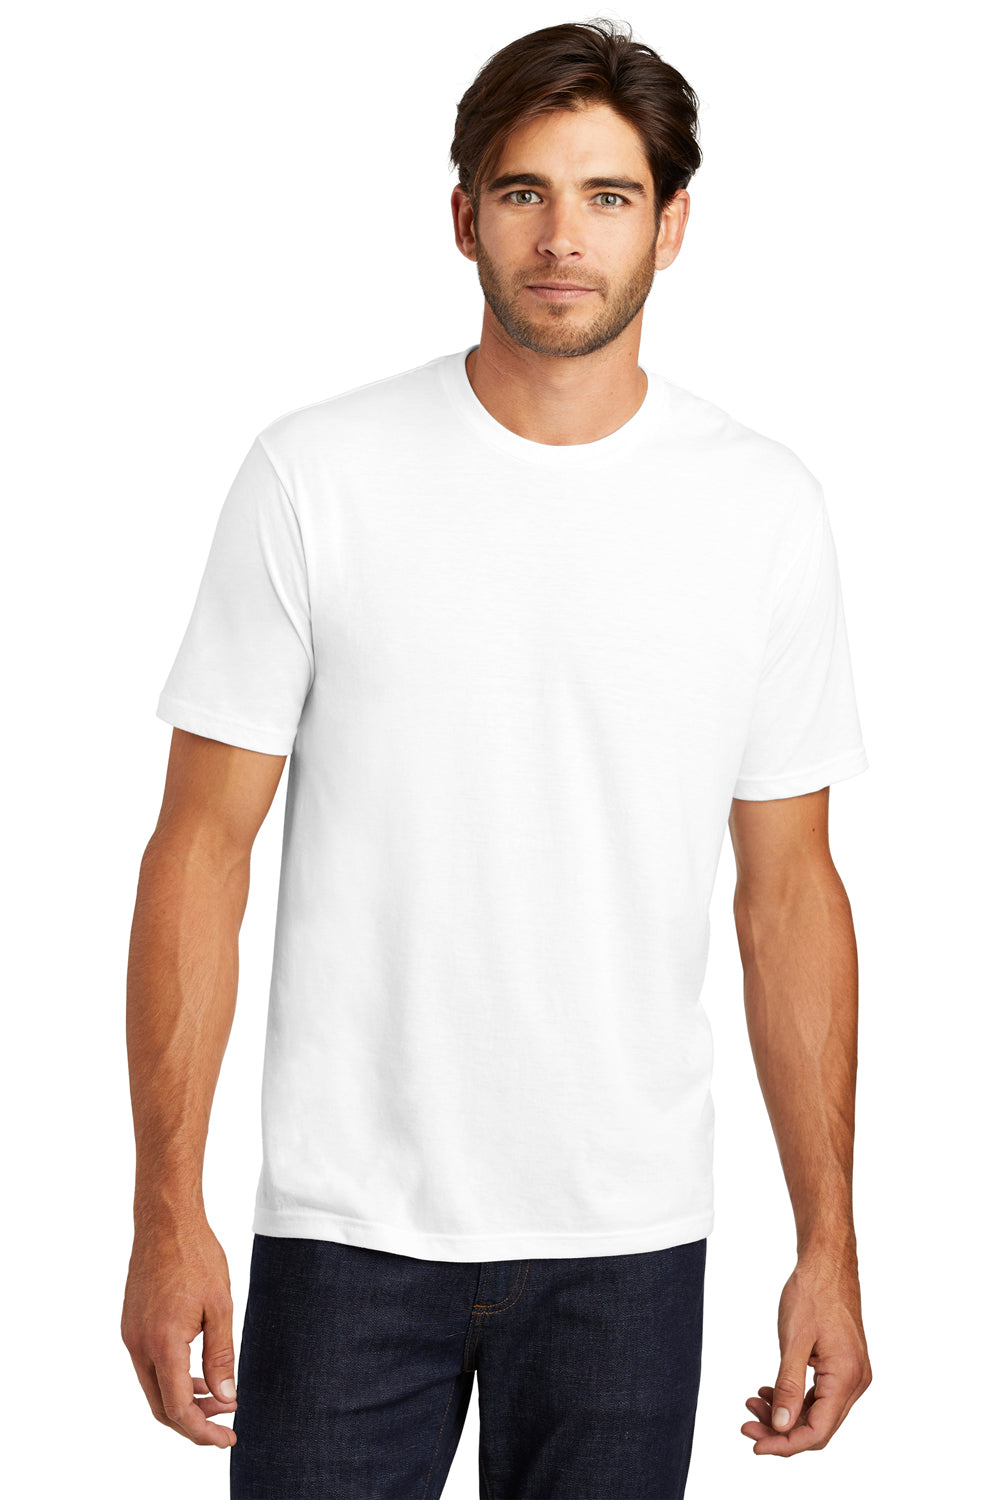 District DM130 Mens Perfect Tri Short Sleeve Crewneck T-Shirt White Front